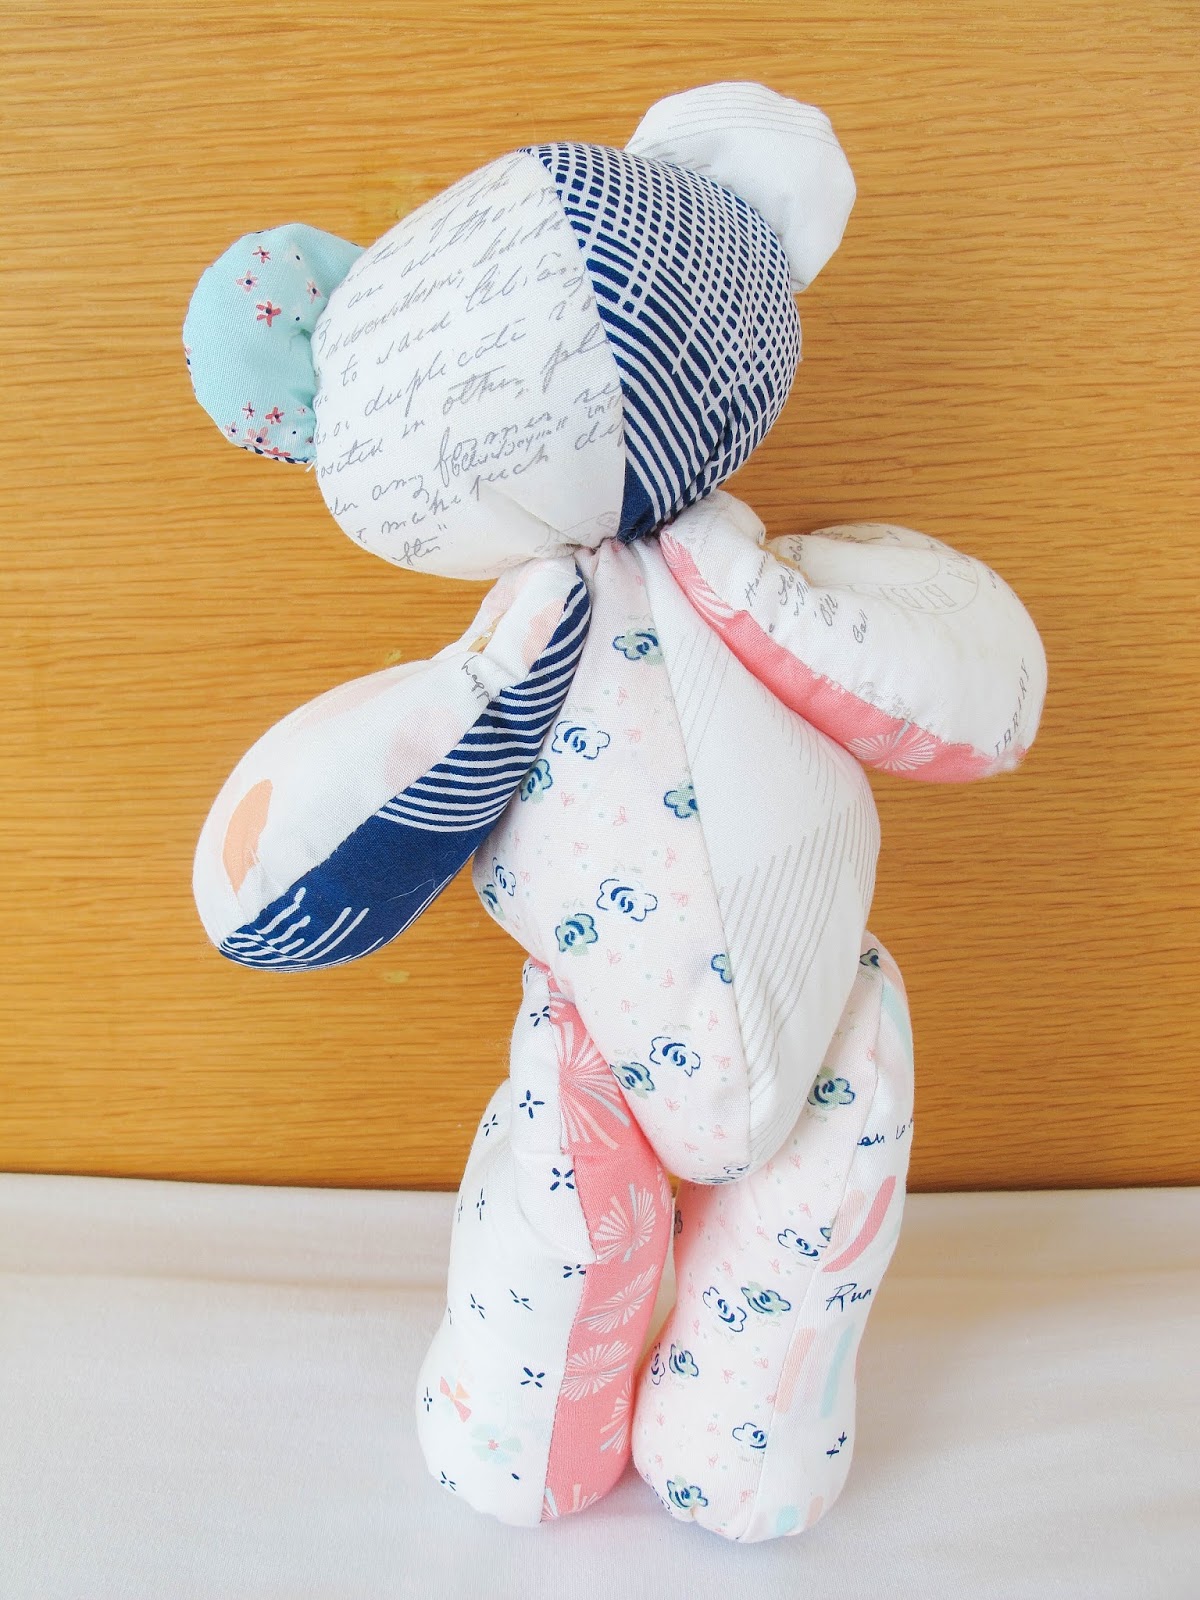 Simple teddy bear pattern by azaleapoena on DeviantArt